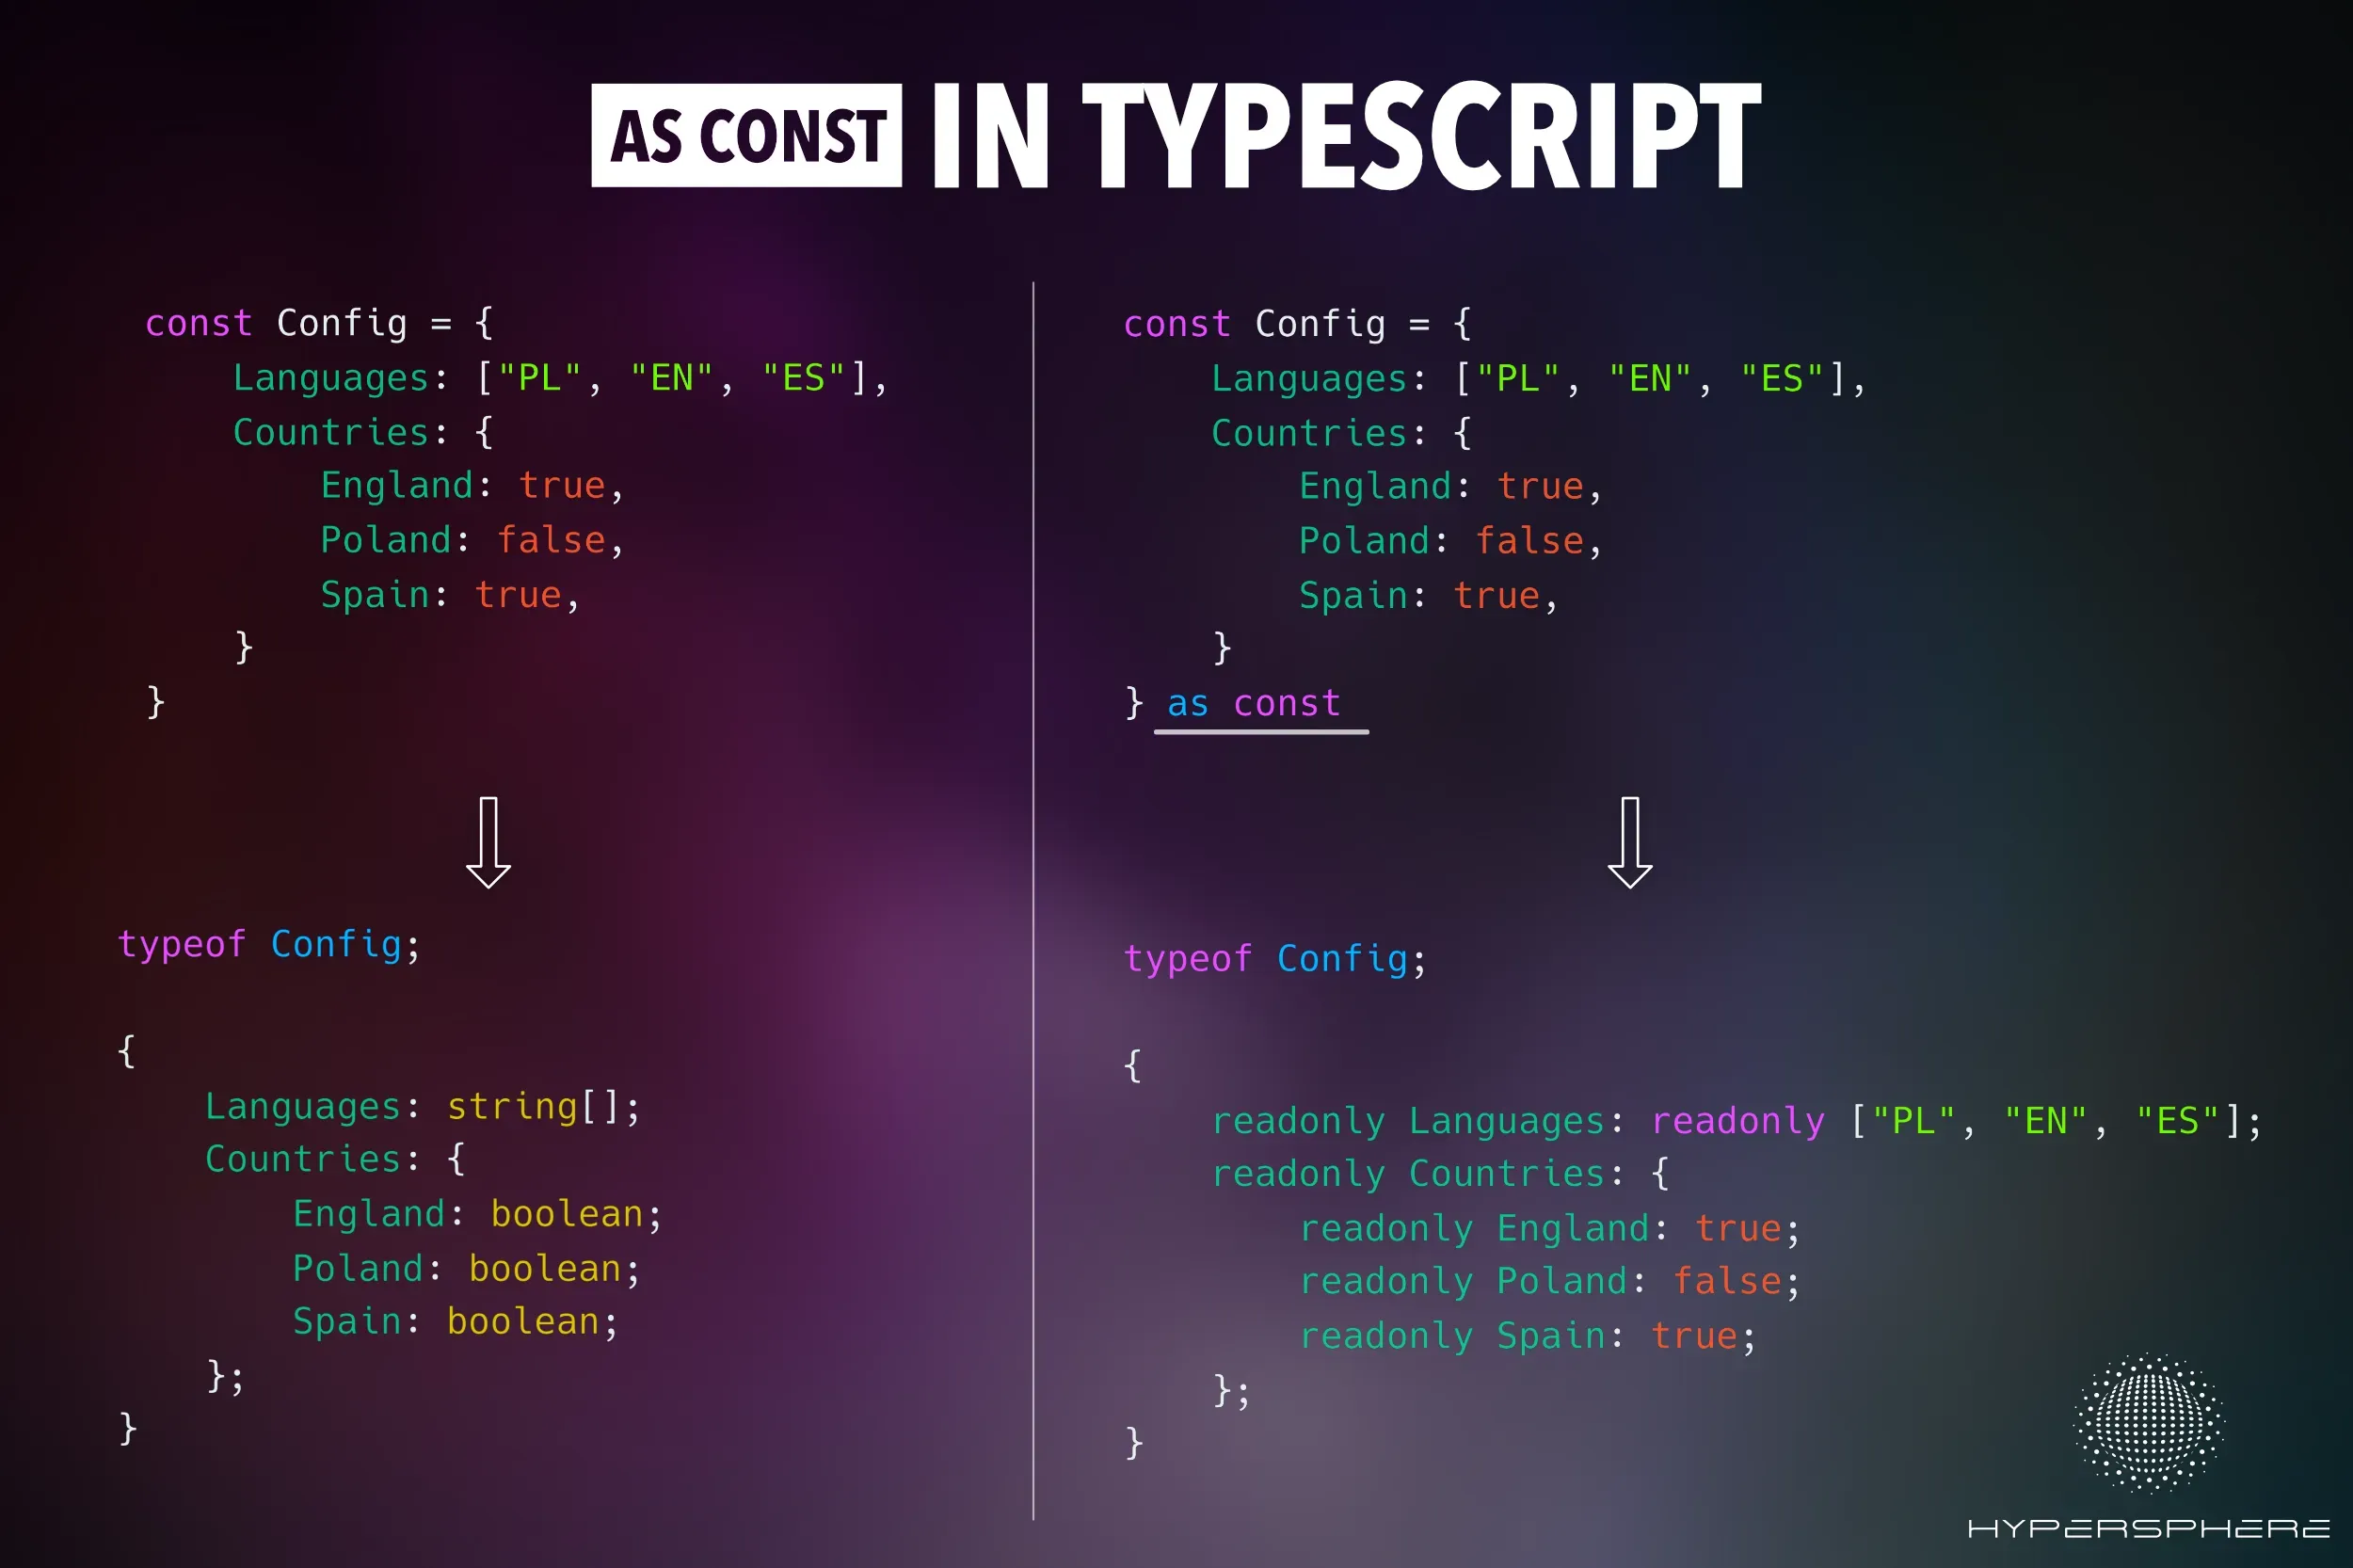 As const in TypeScript